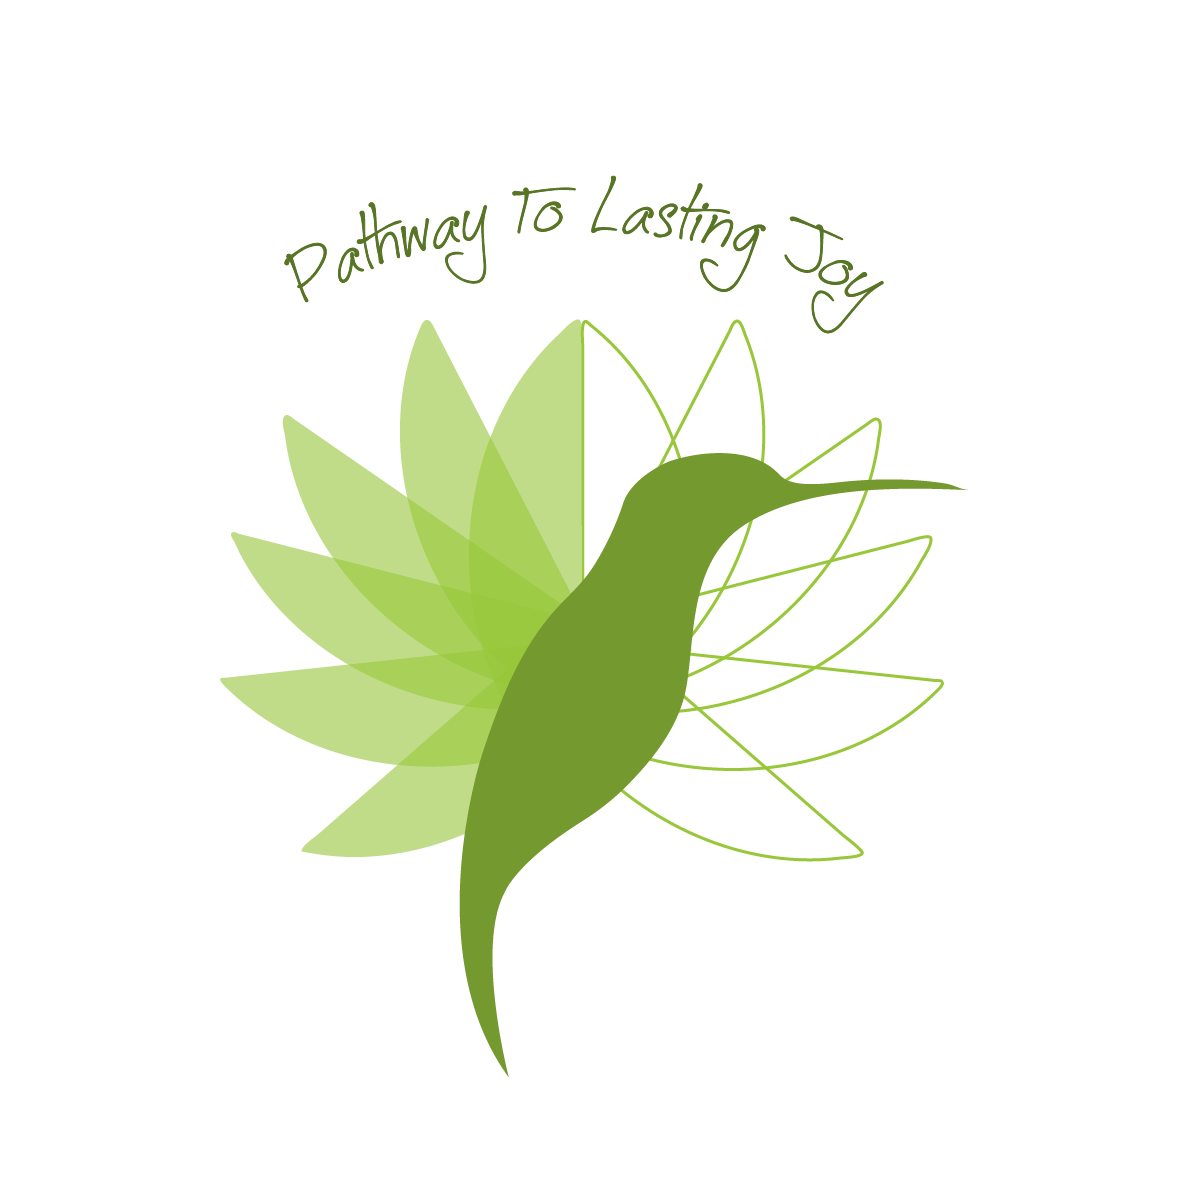 Pathway to Lasting Joy logo